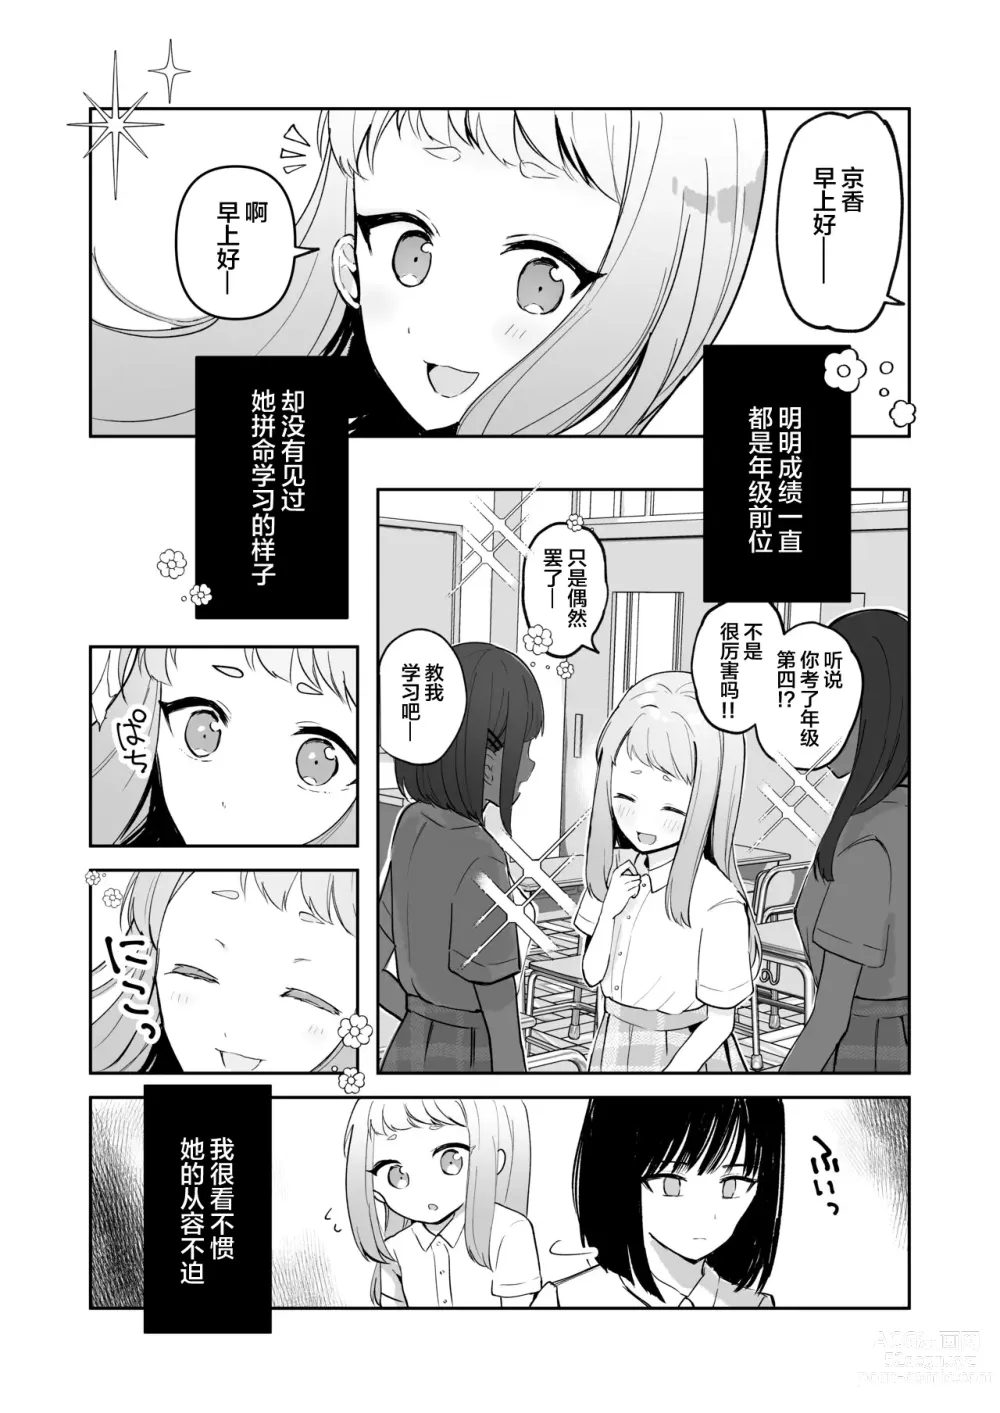 Page 6 of doujinshi 还可以忍耐的吧?